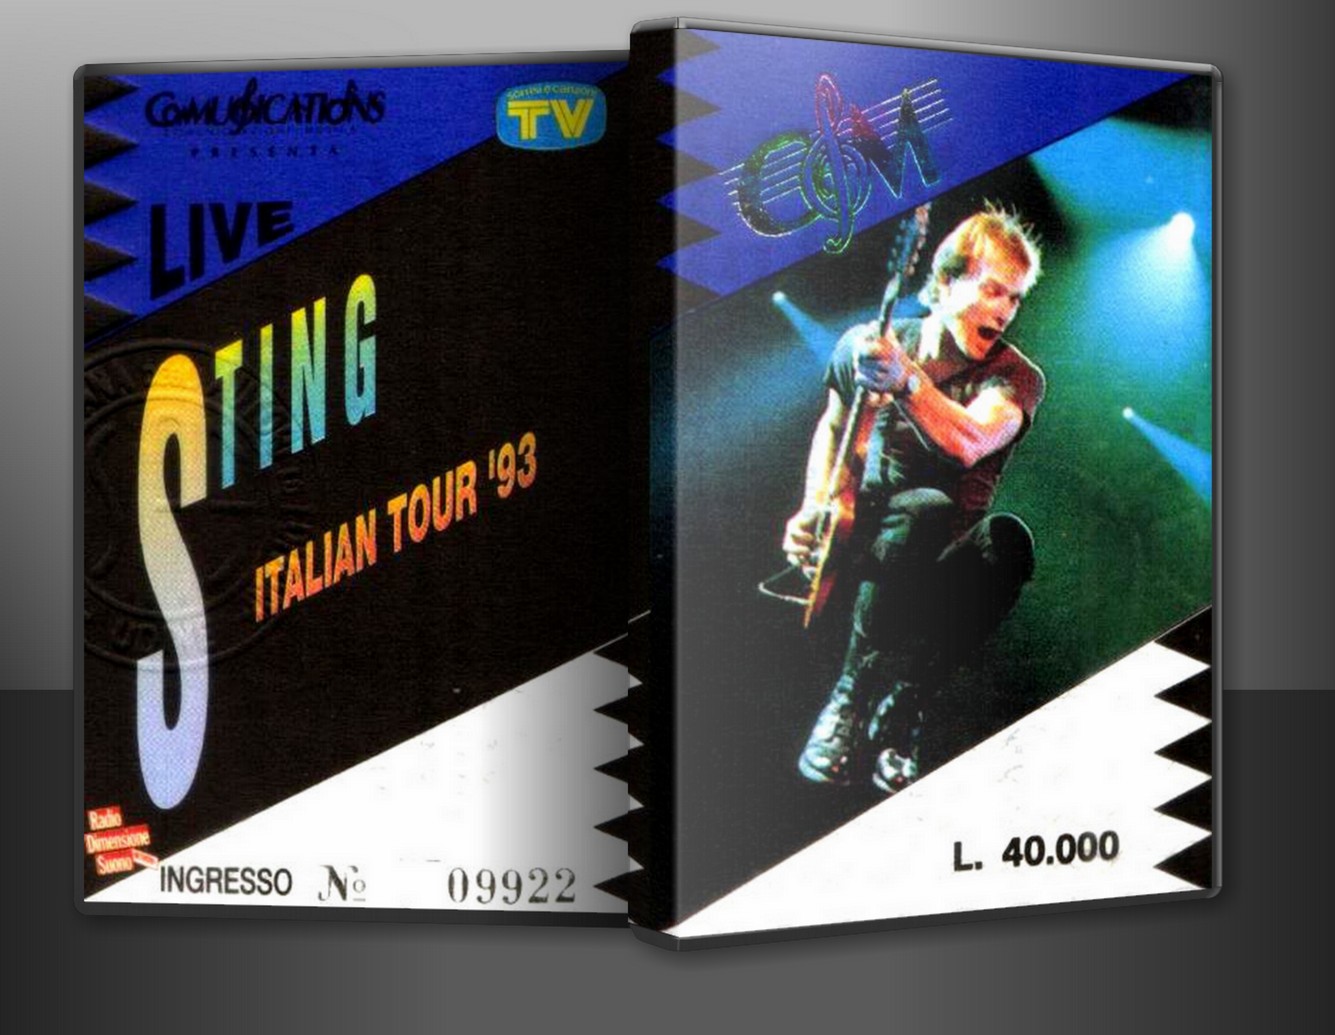 http://1.bp.blogspot.com/-tyq0oBKvBf0/T3aADJPBvLI/AAAAAAAAFiU/O83DJ6NbQBY/s1600/DVD+Cover+For+Show+-+Sting_1993-07-25_Passariano_Villa_Manin_Italy_DVD.jpg